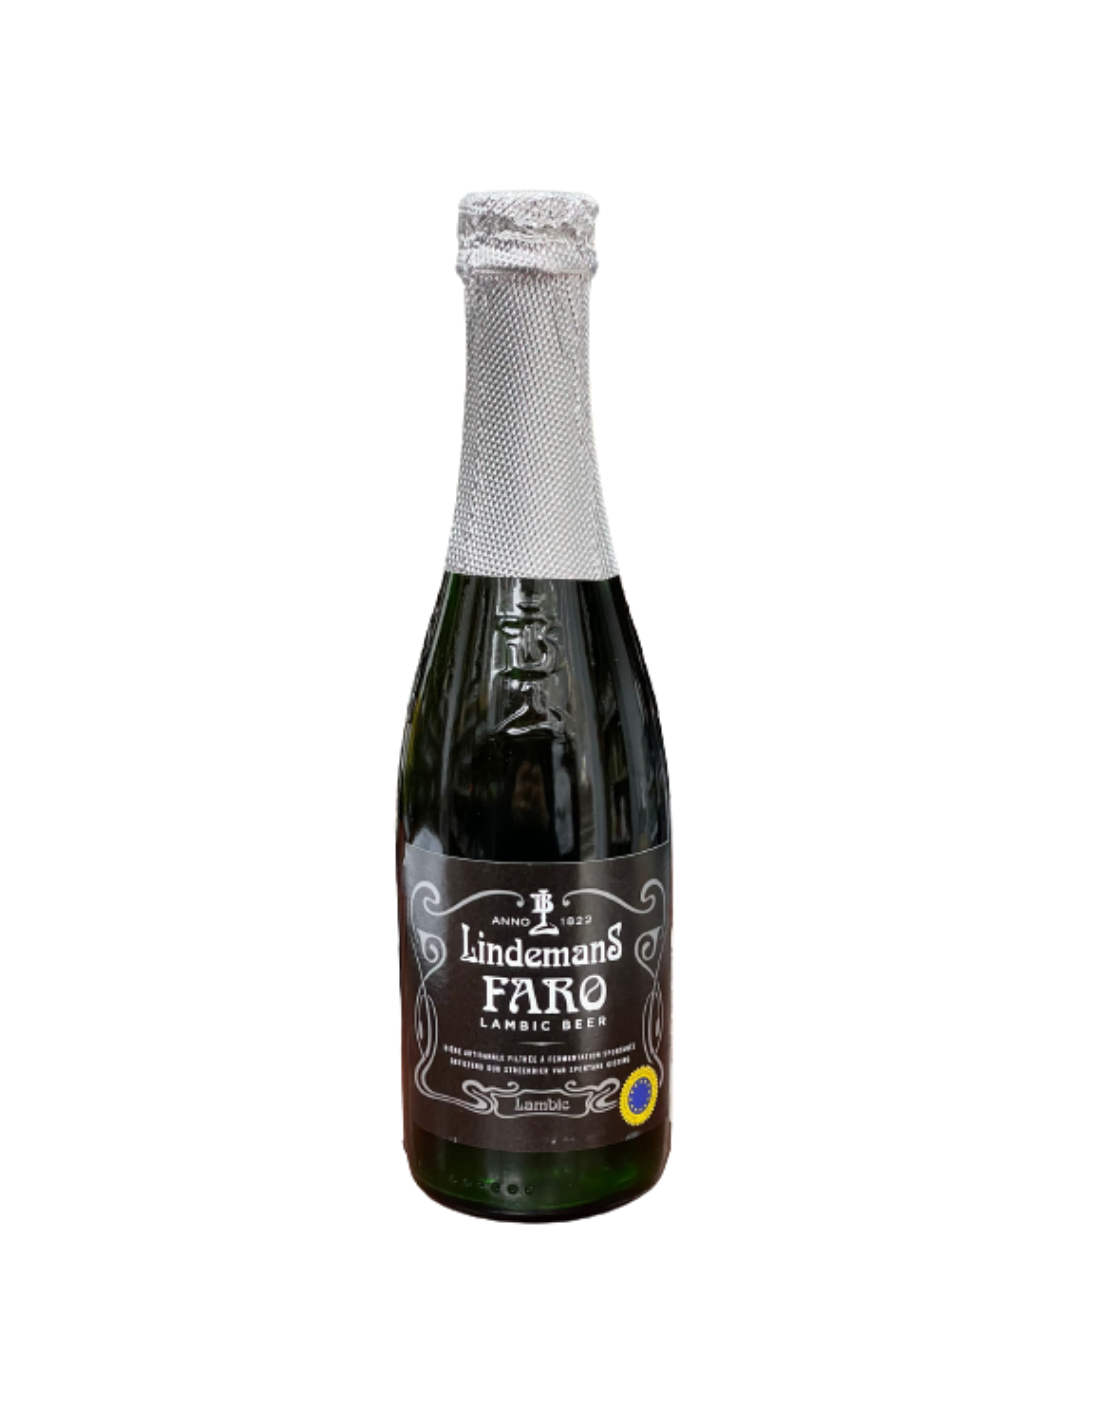 Bere bruna Lindemans Faro, 4.5% alc., 0.355L, sticla, Belgia alcooldiscount.ro